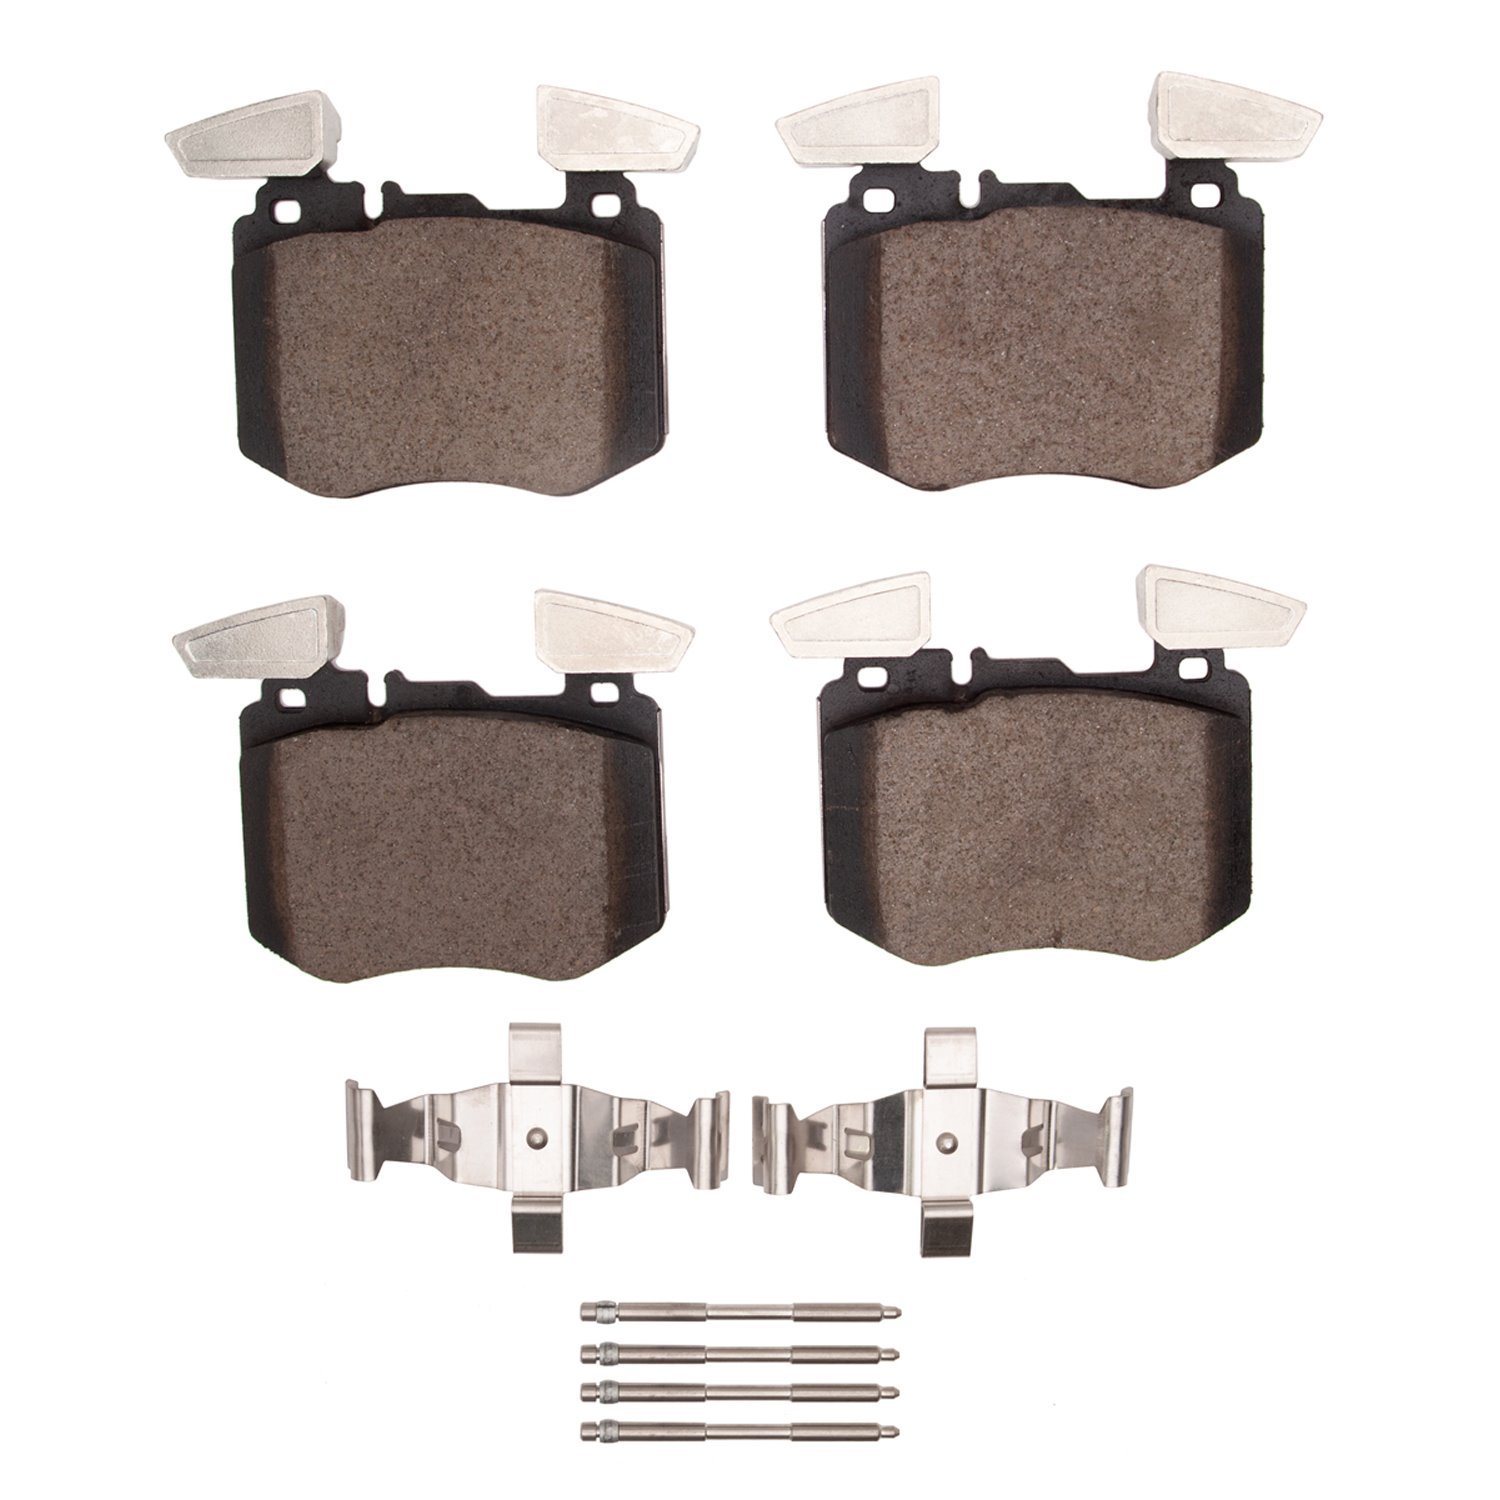 1310-2162-01 3000-Series Ceramic Brake Pads & Hardware Kit, Fits Select Mercedes-Benz, Position: Front